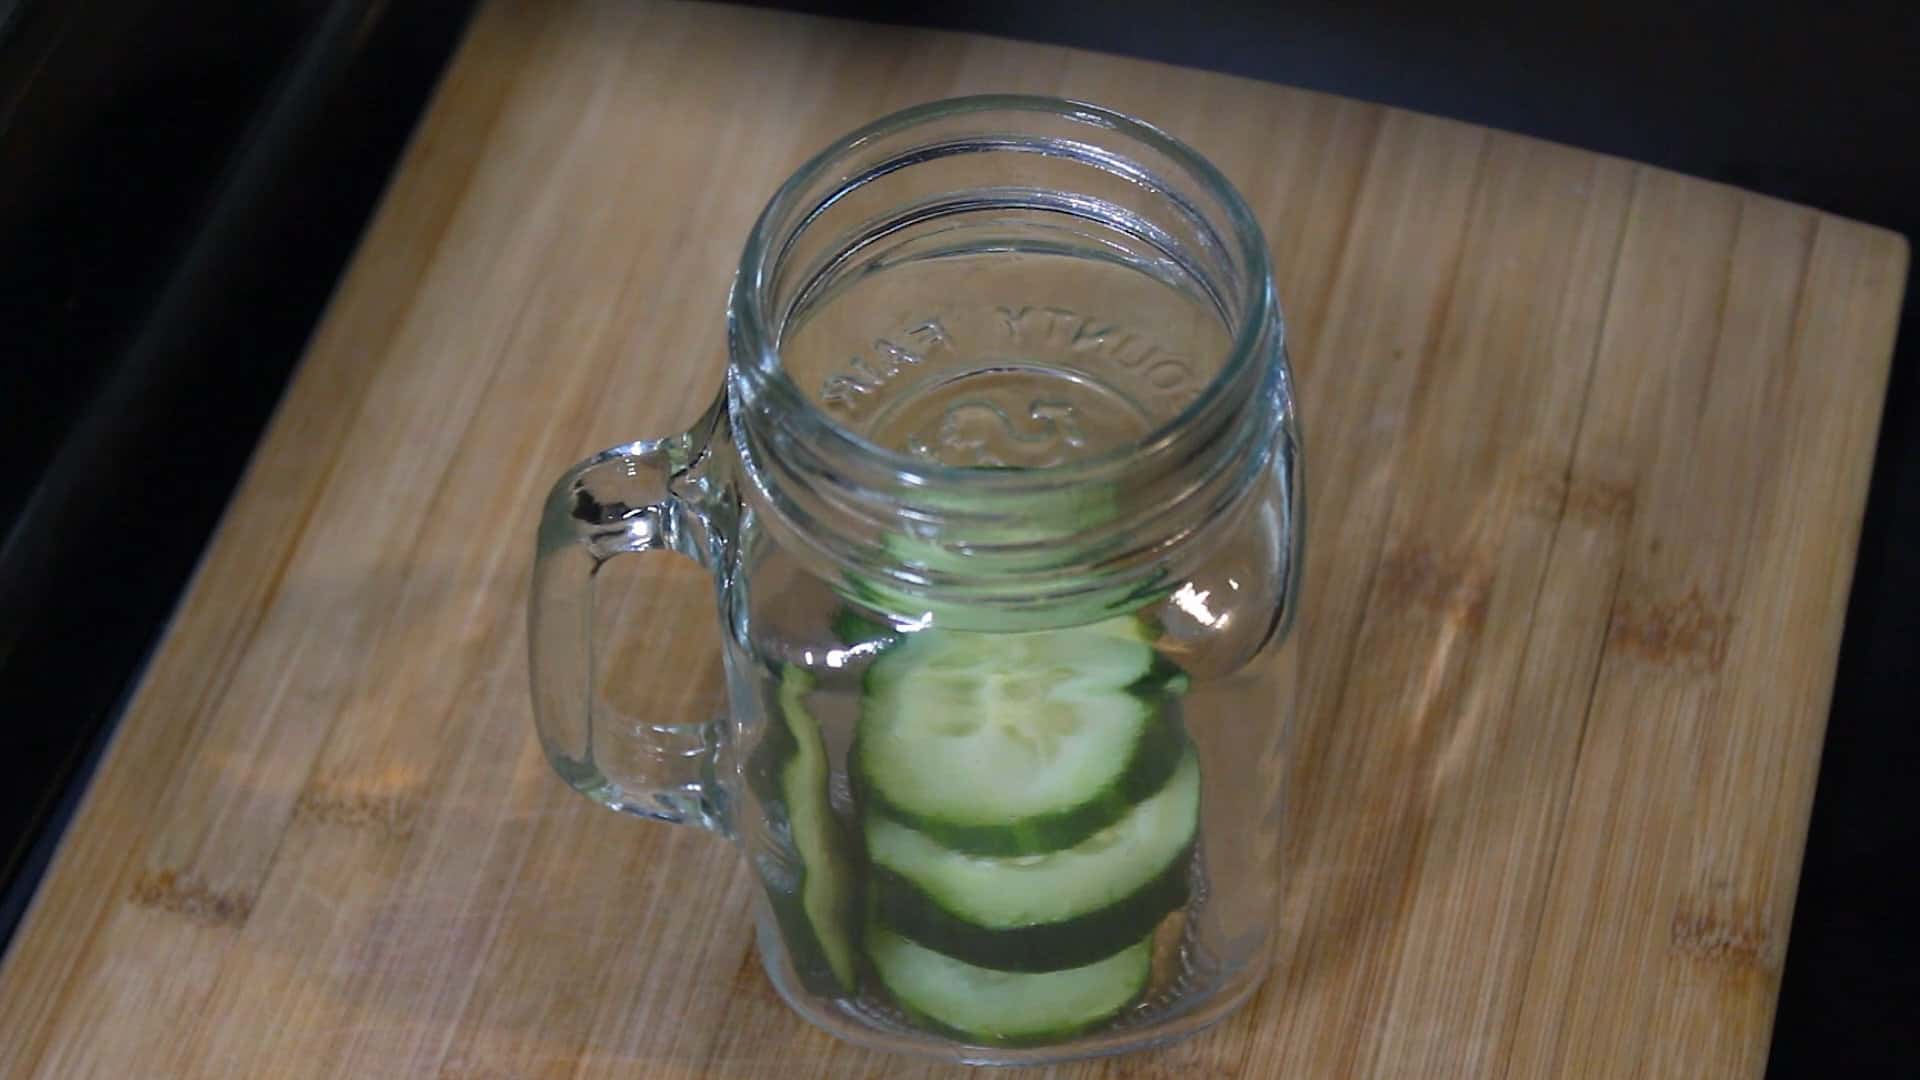 cucumber slices added in a jar